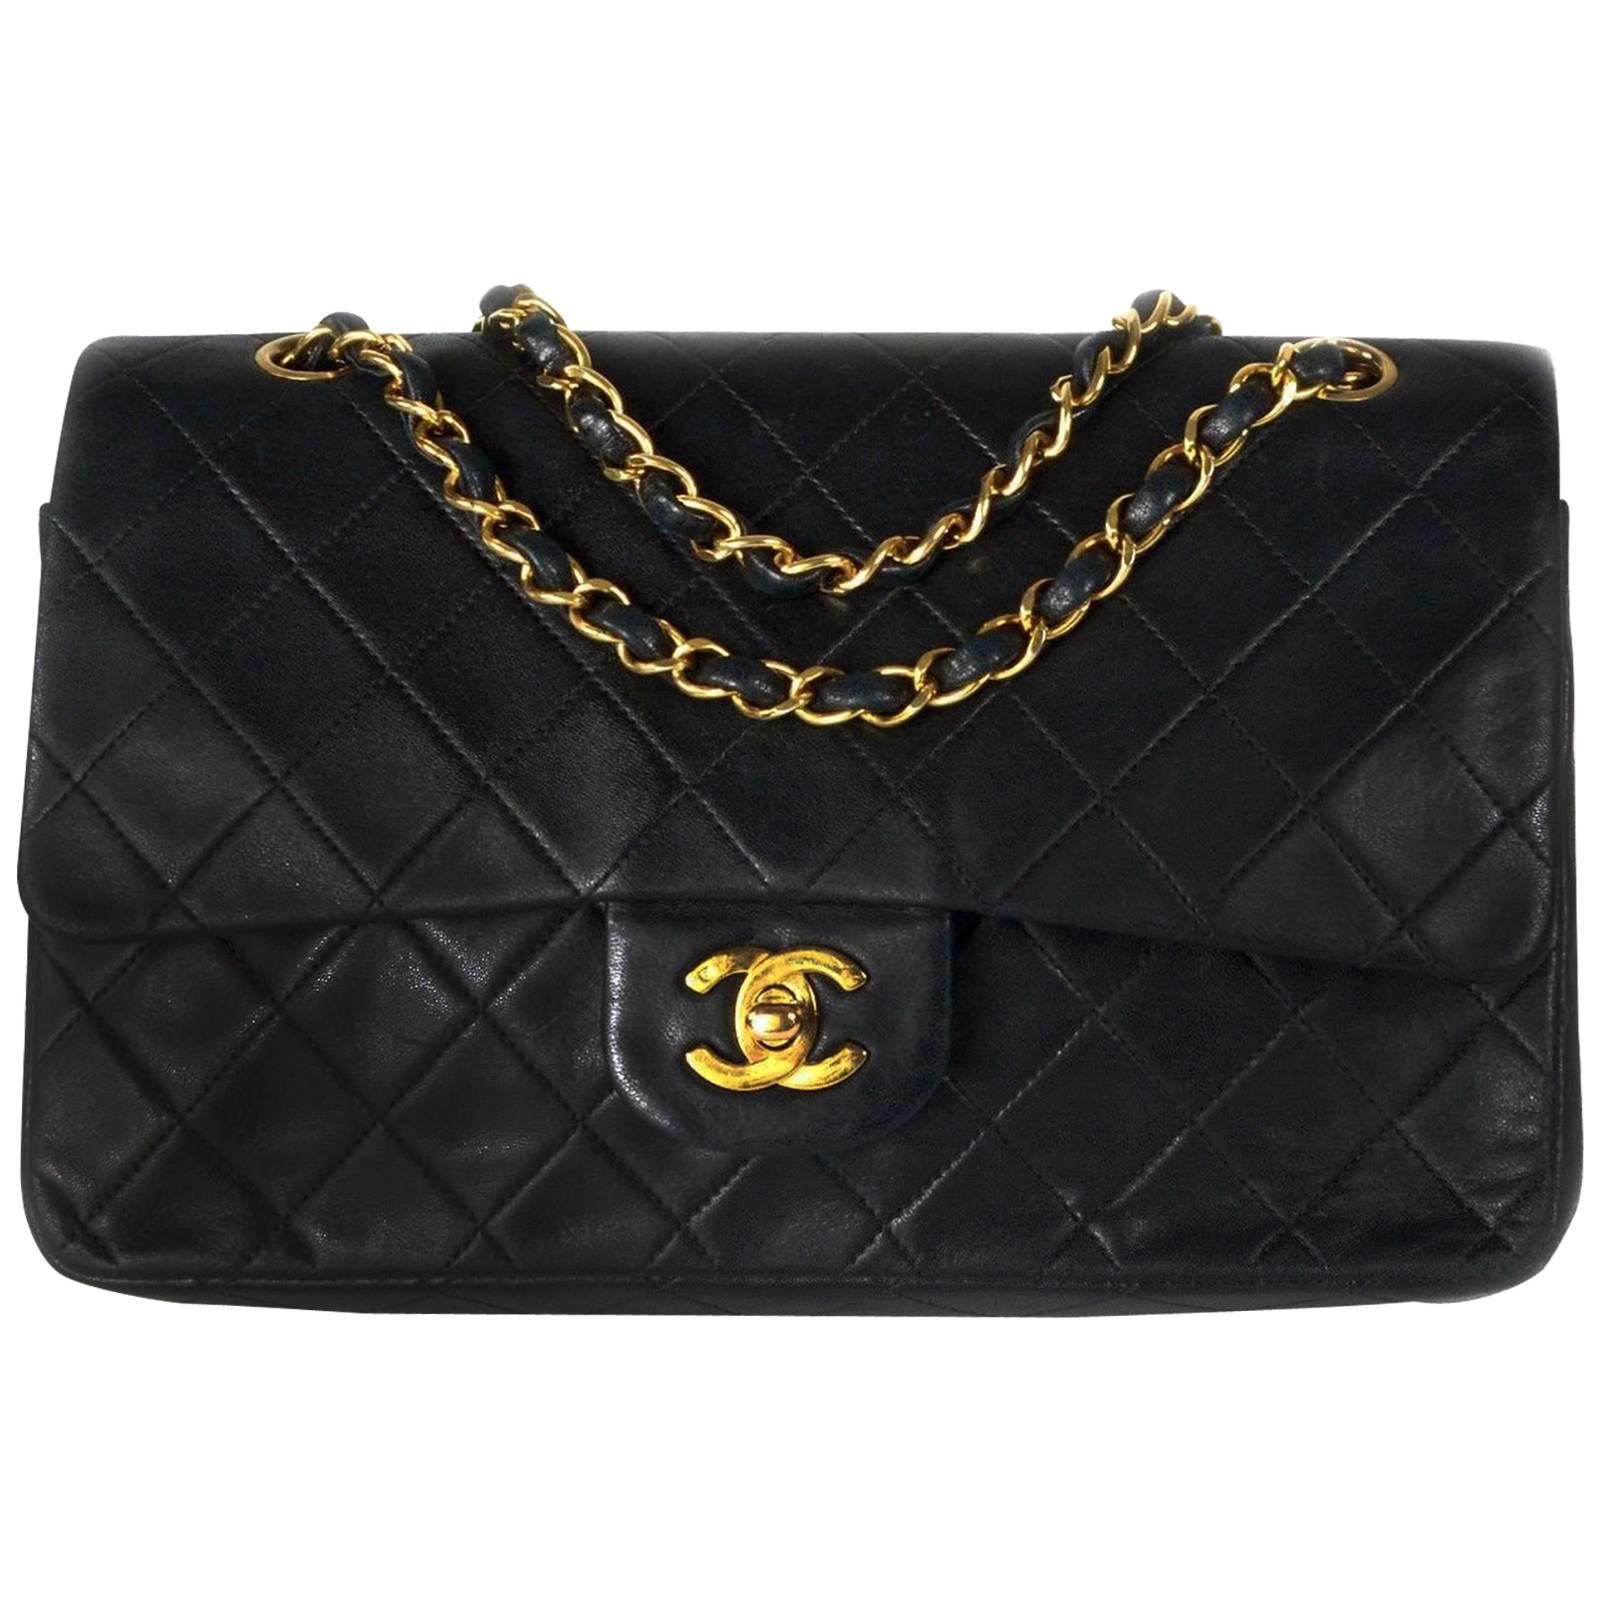 Chanel Medium Black Leather Bag - Quilted Double Flap CC Gold Shoulder Handbag